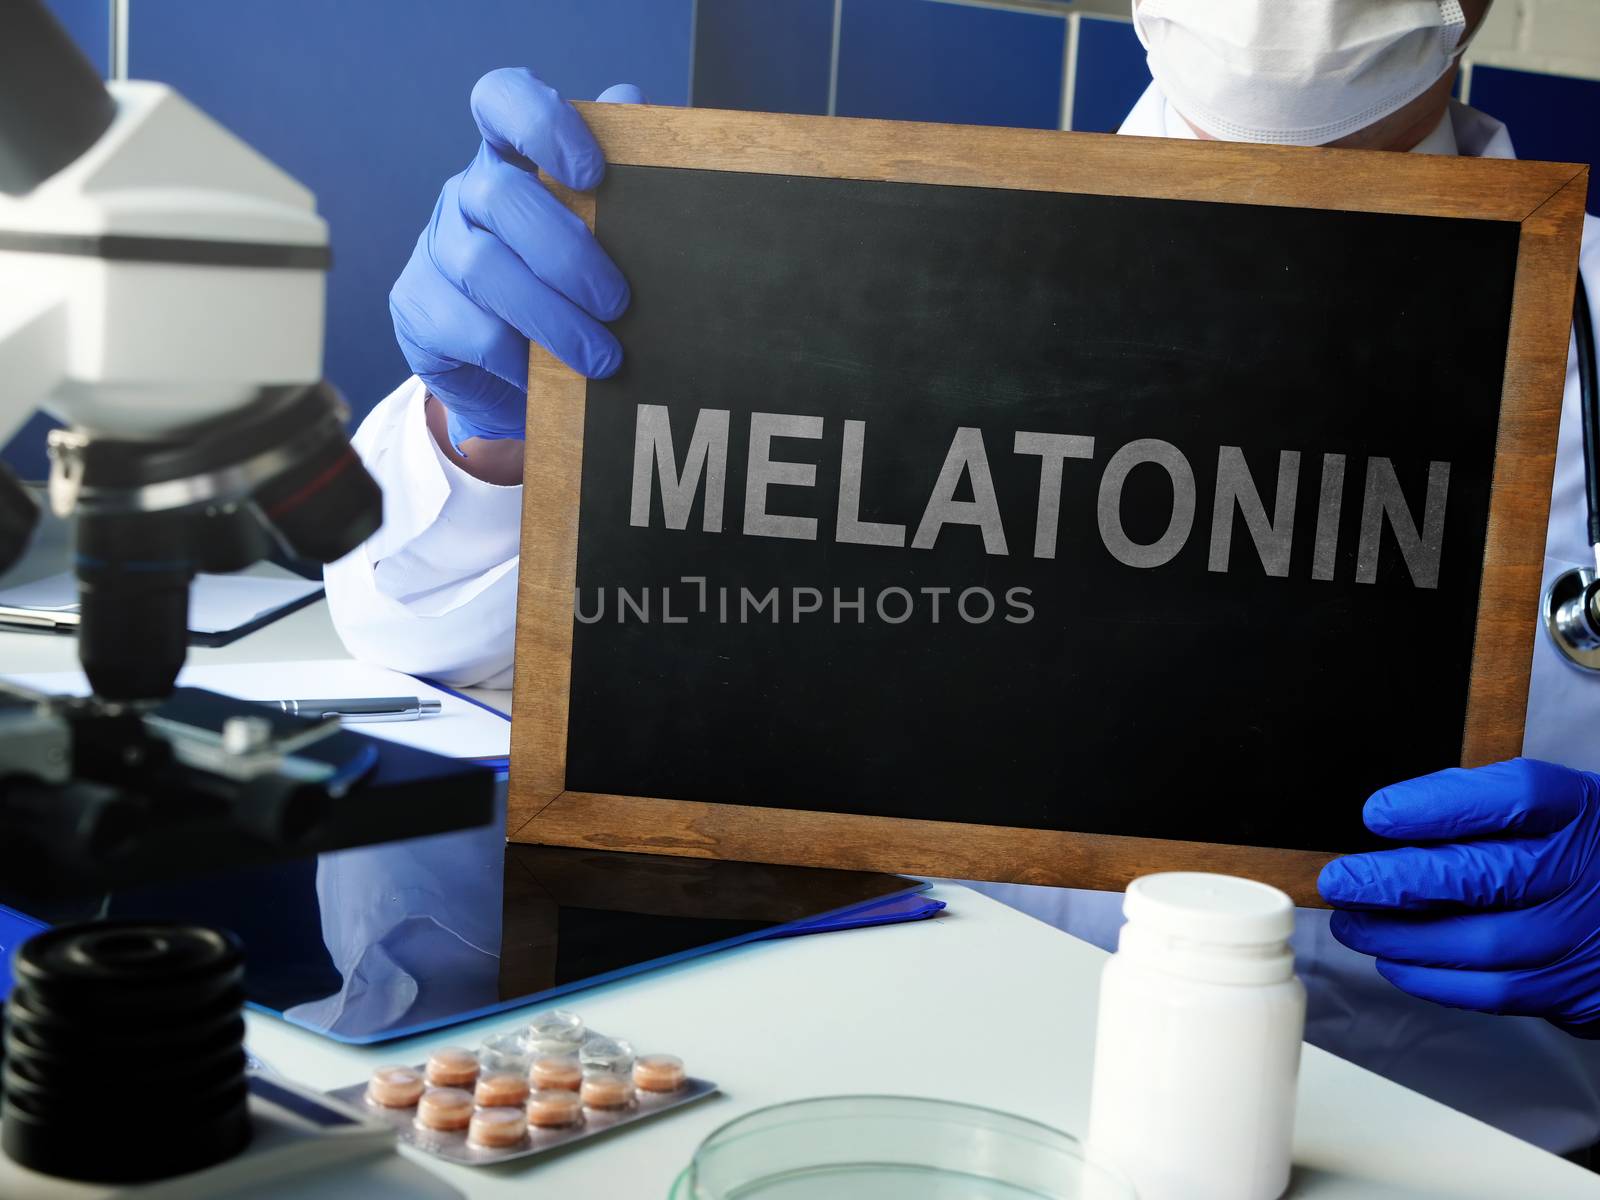 Melatonin hormone on the blackboard in the laboratory.